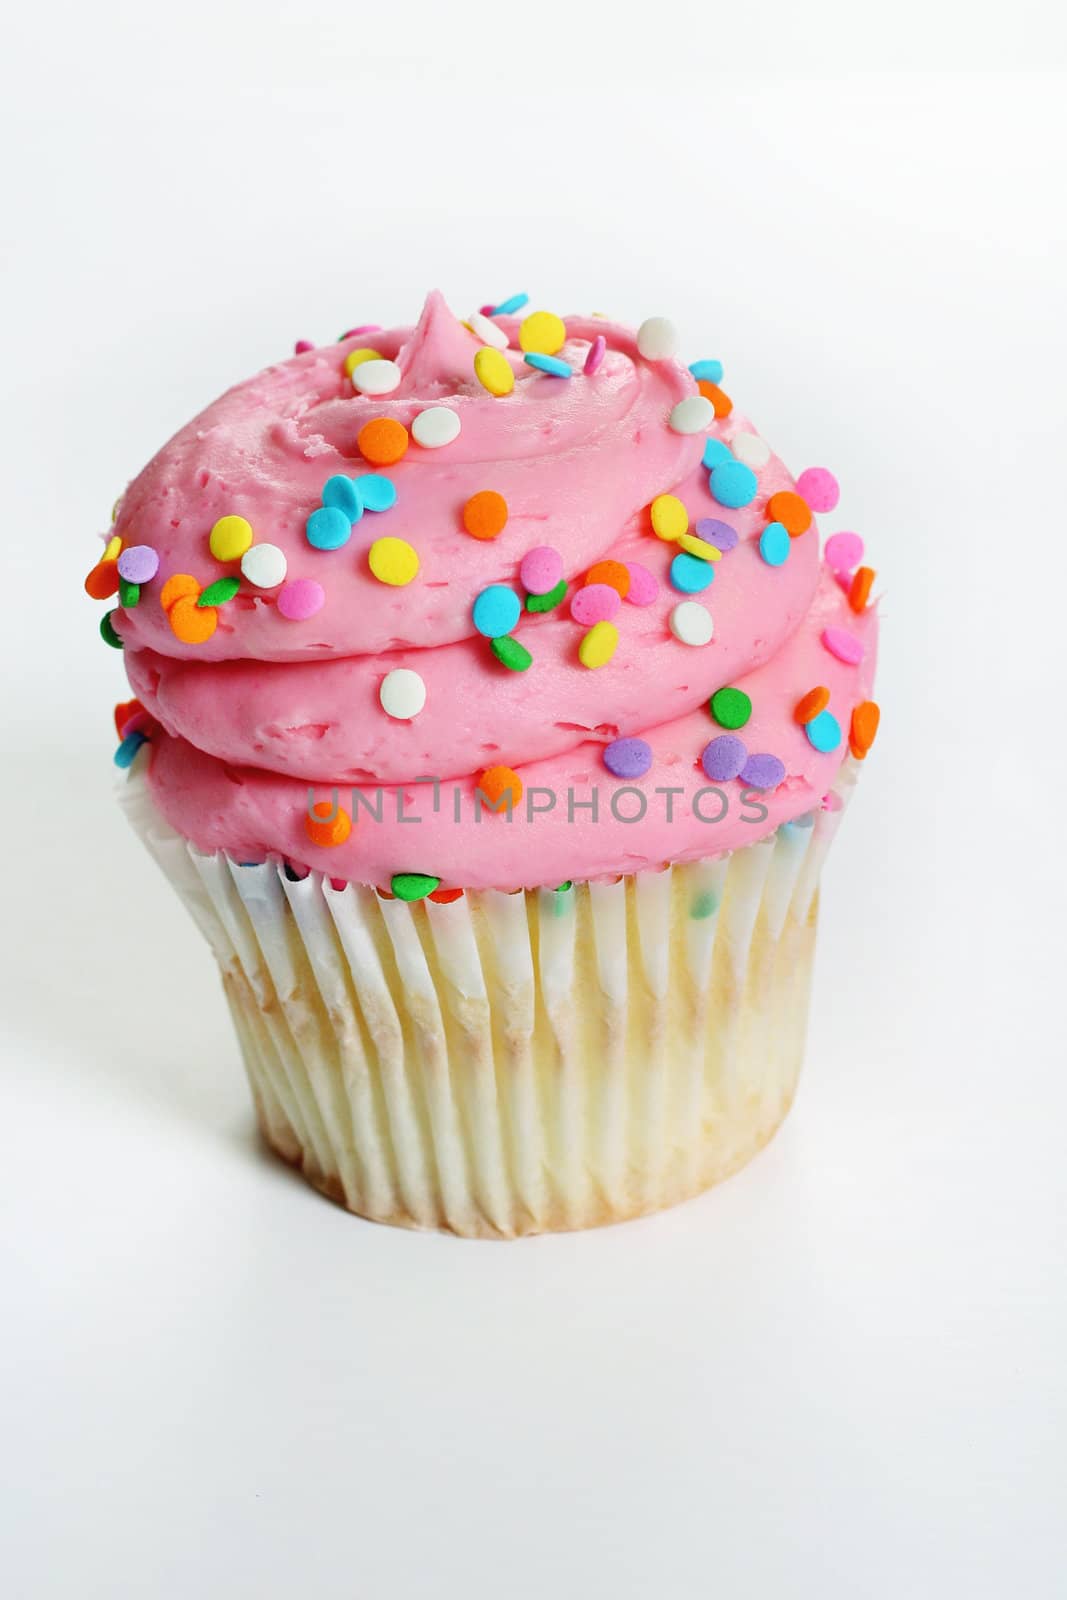 shot of a gourmet pink cupcake up close vertical by creativestock